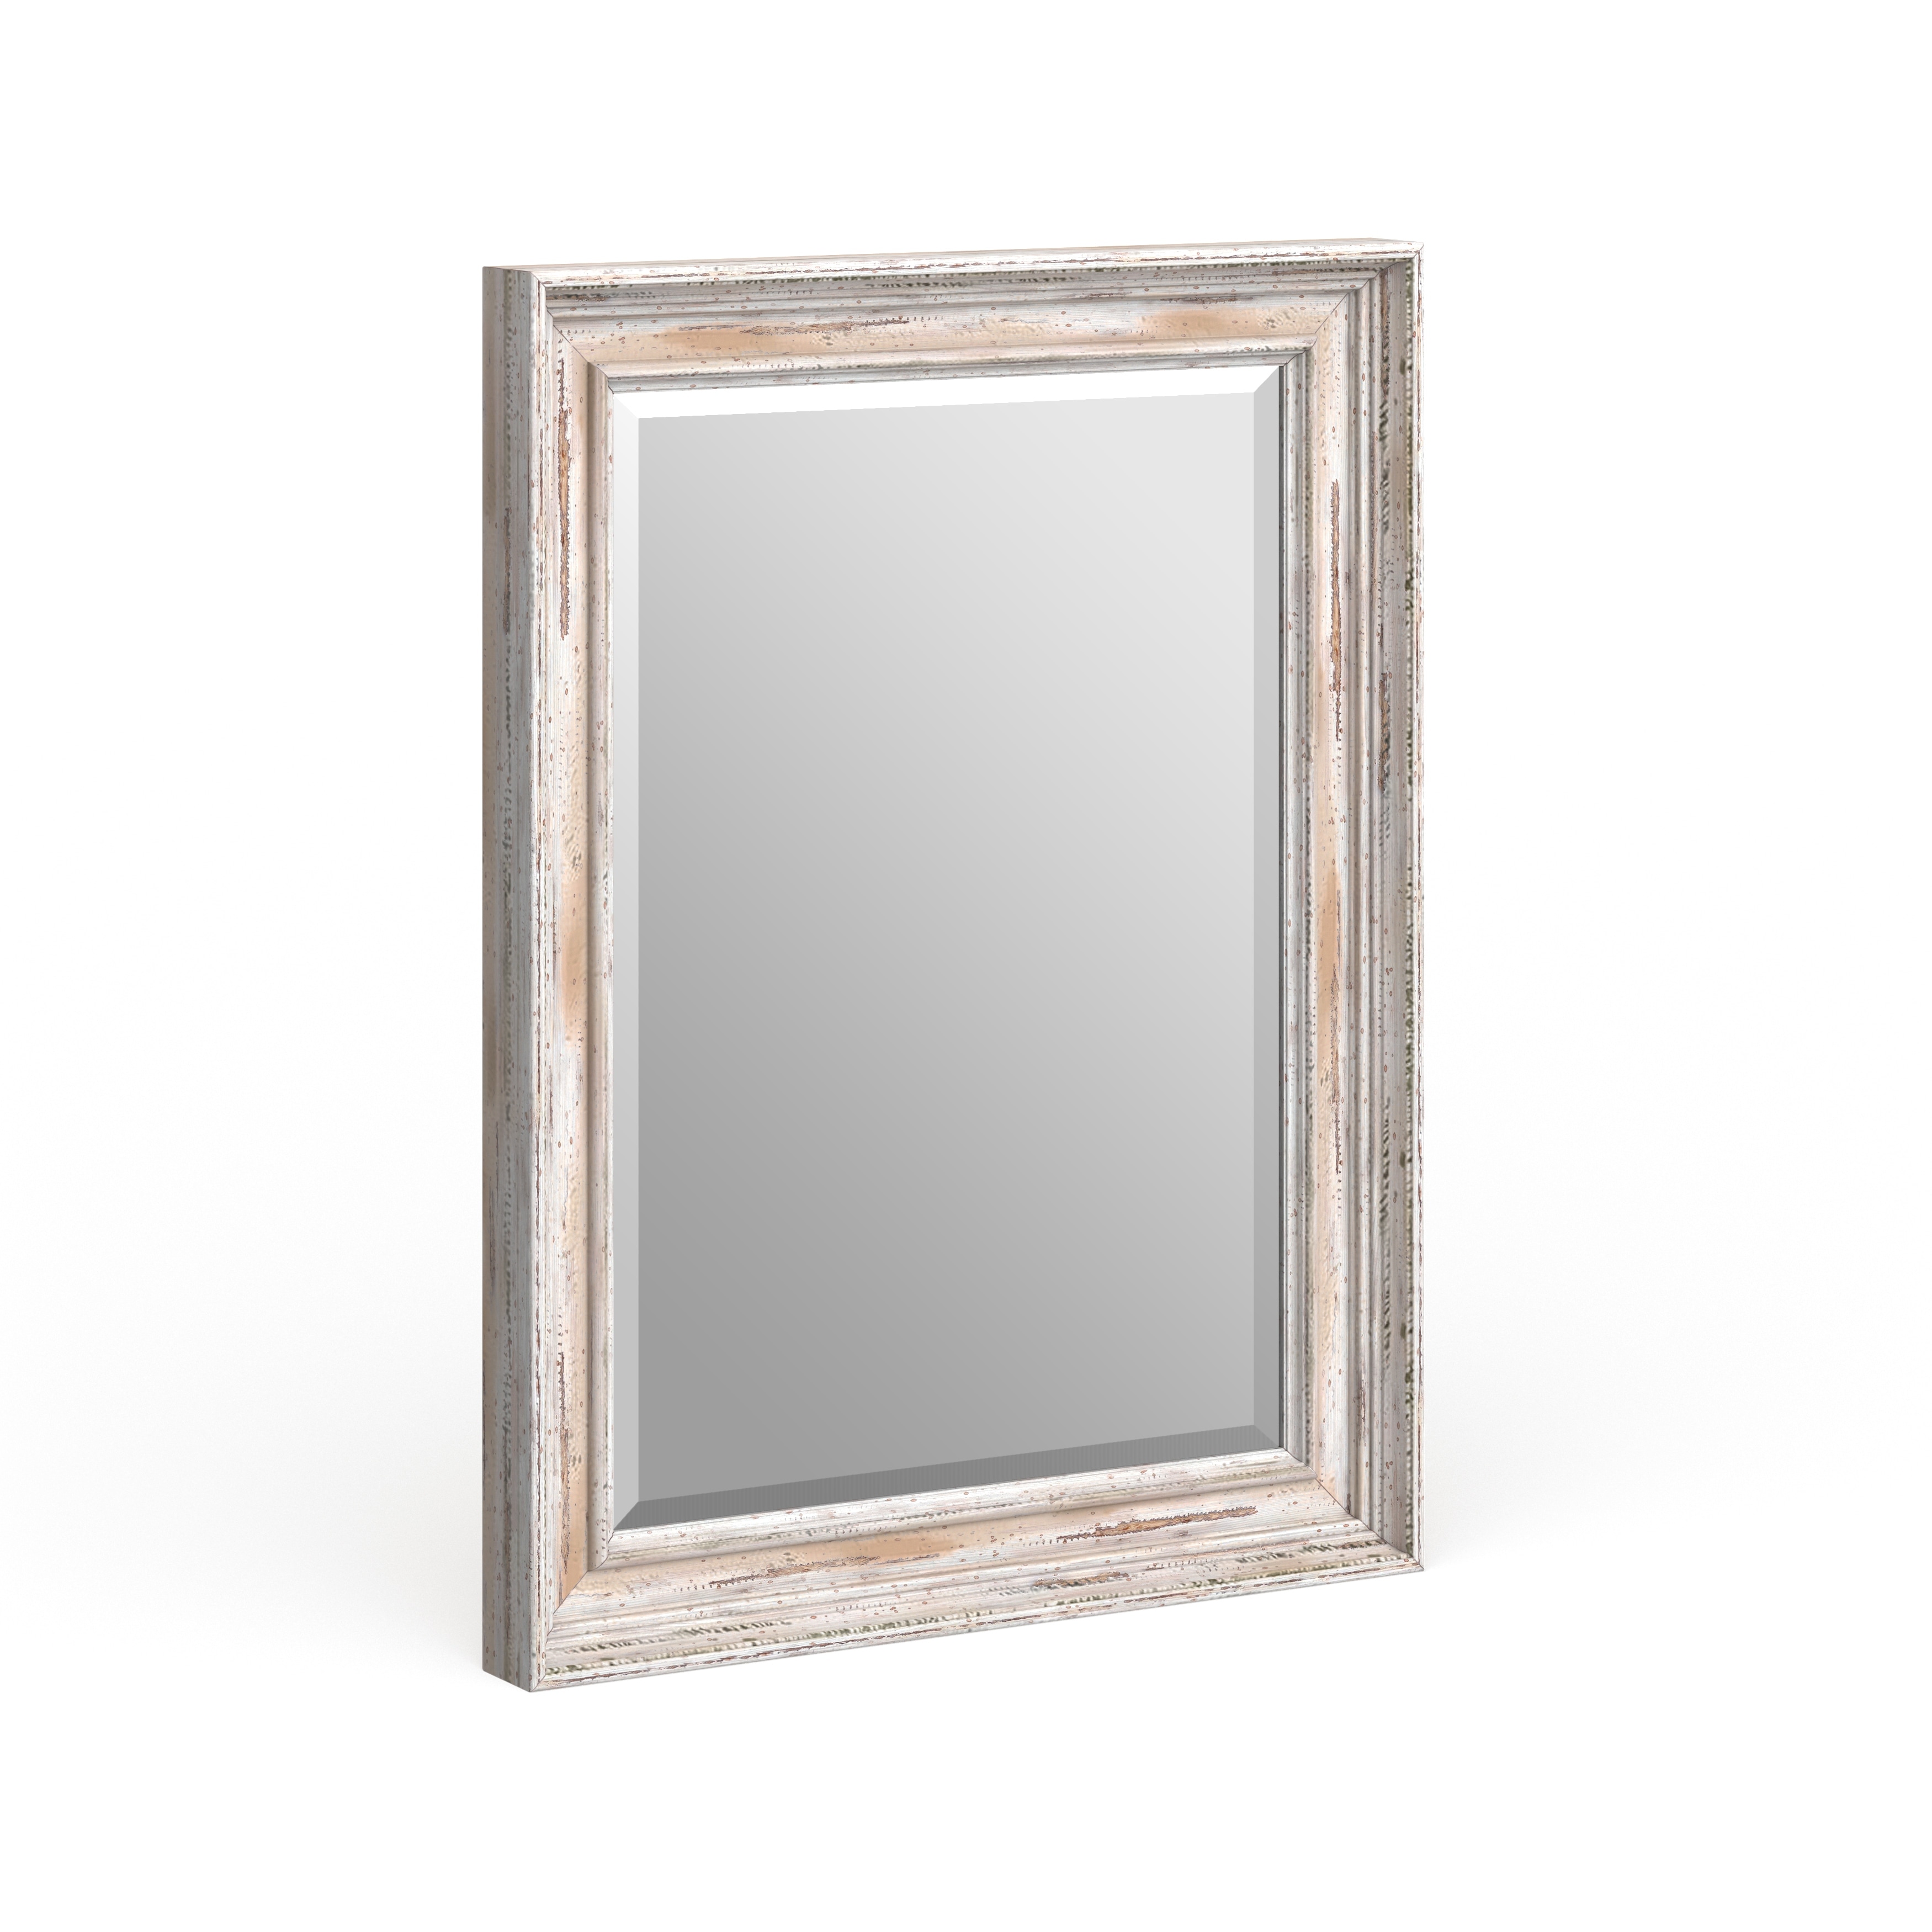 white wall mirror walmart $5.88